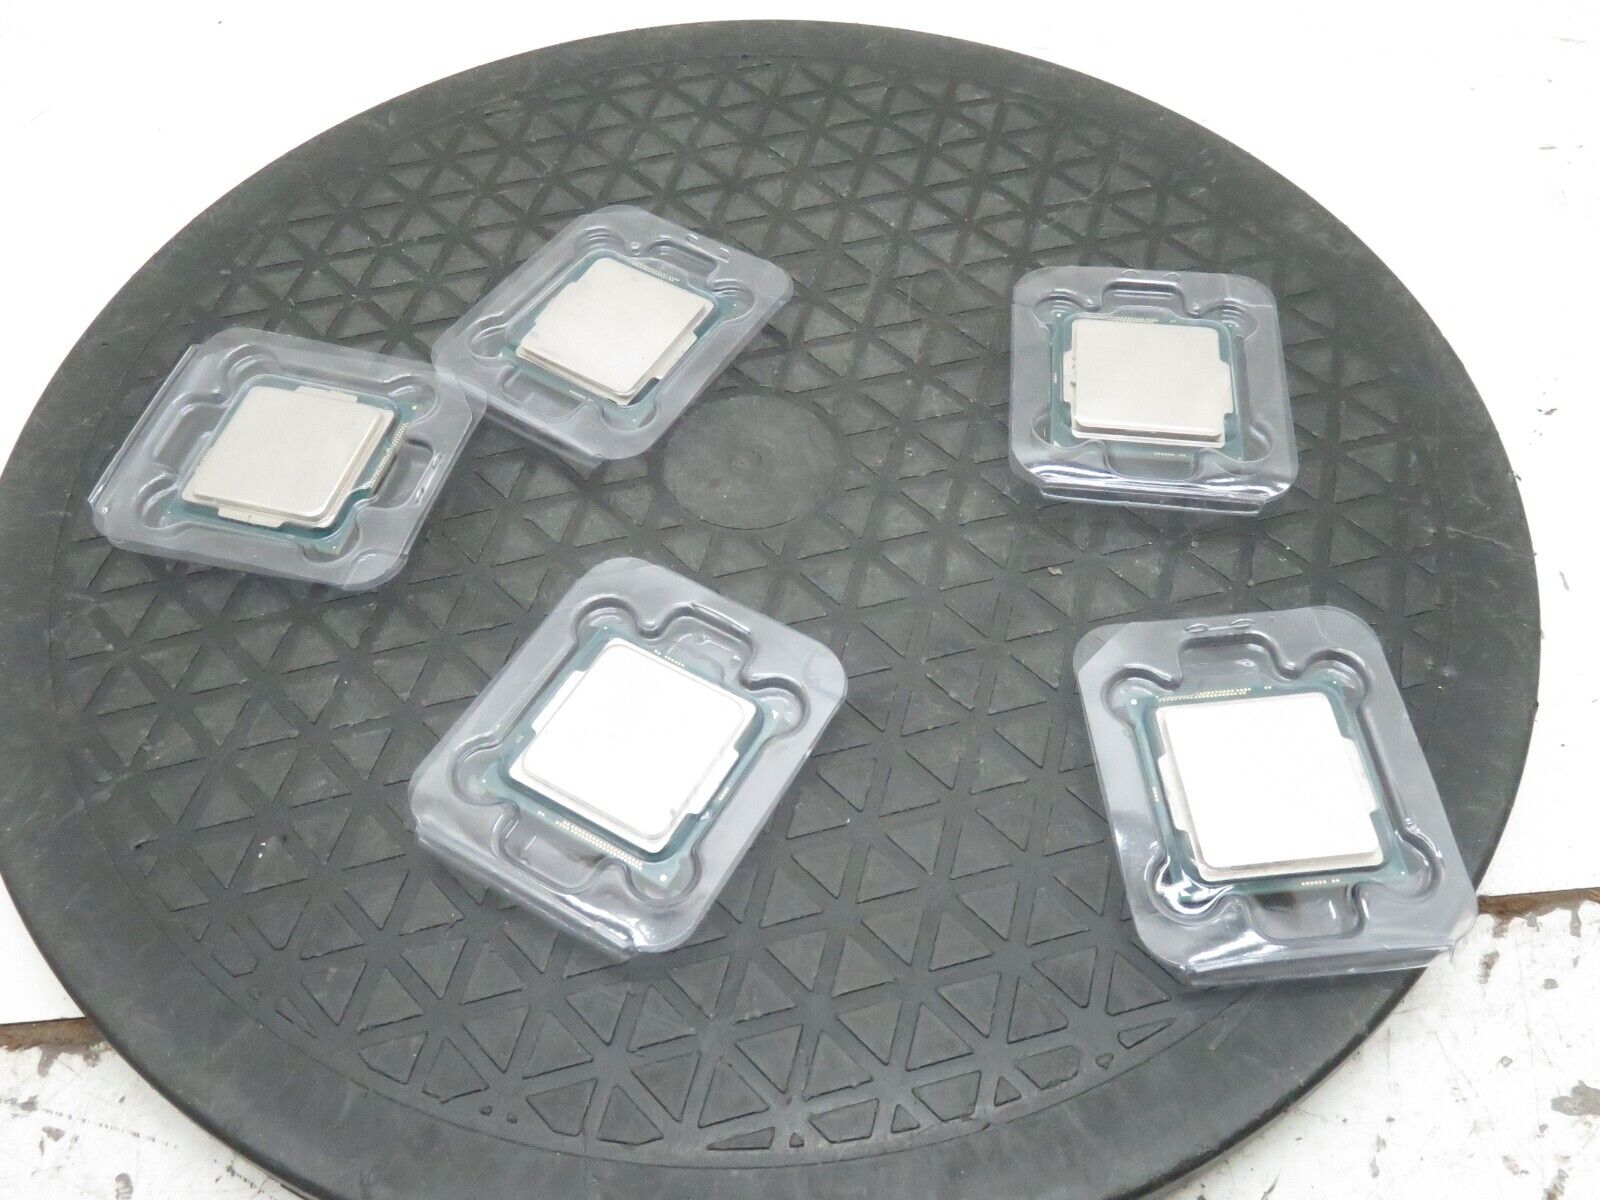 Lot of 5 Intel Core i7-4790S 3.20GHz LGA 1150 Socket CPUs